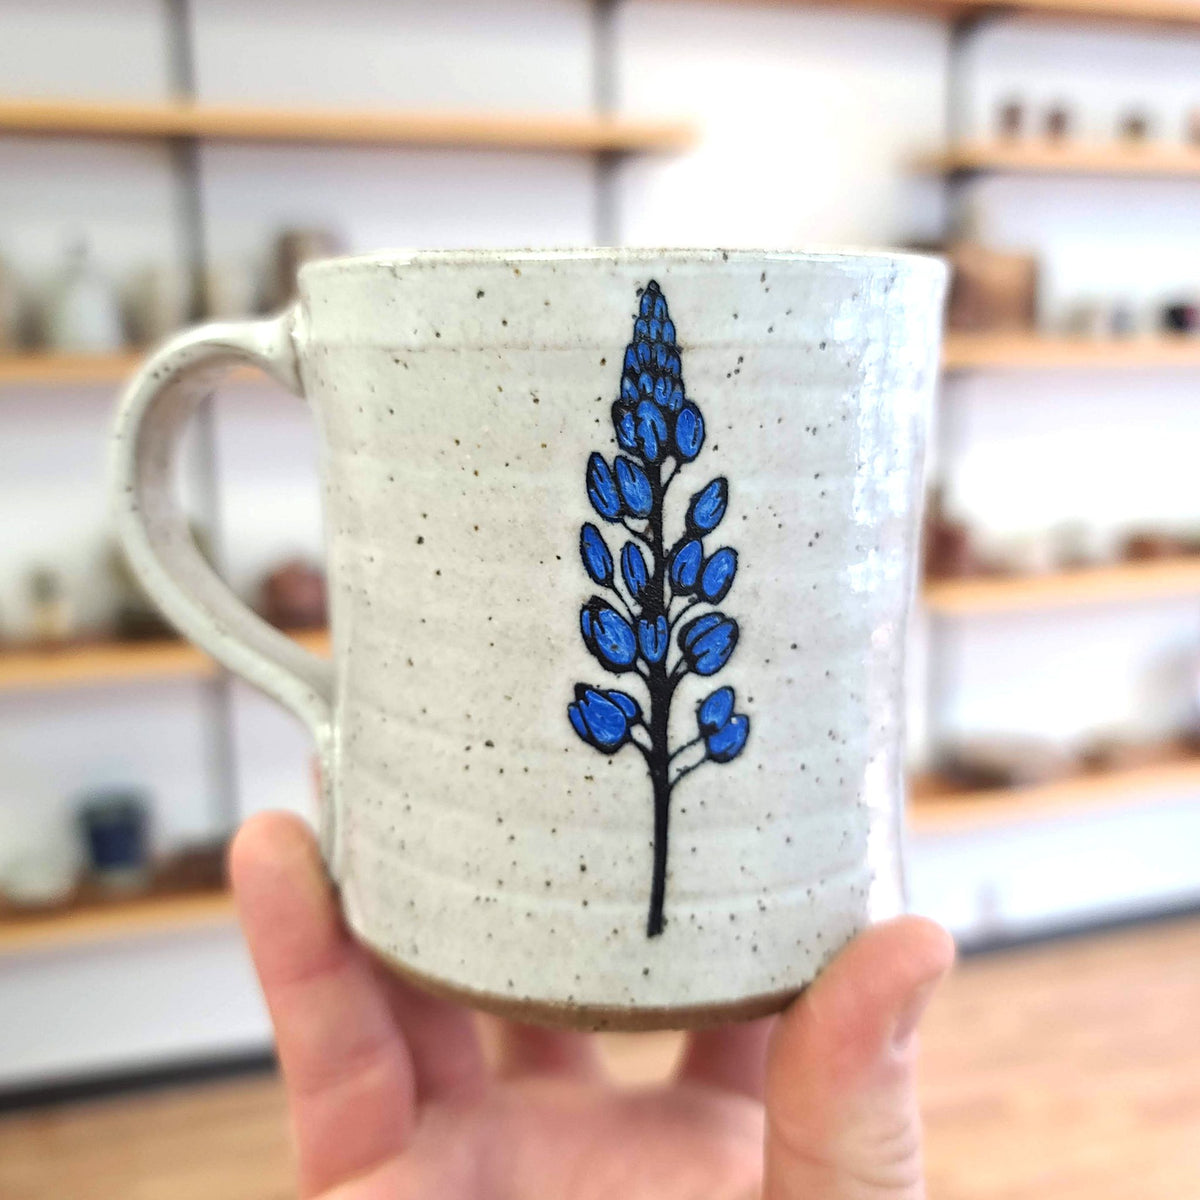 15oz Ceramic Mug featuring a blue lupine flower on nuetral cream glaze